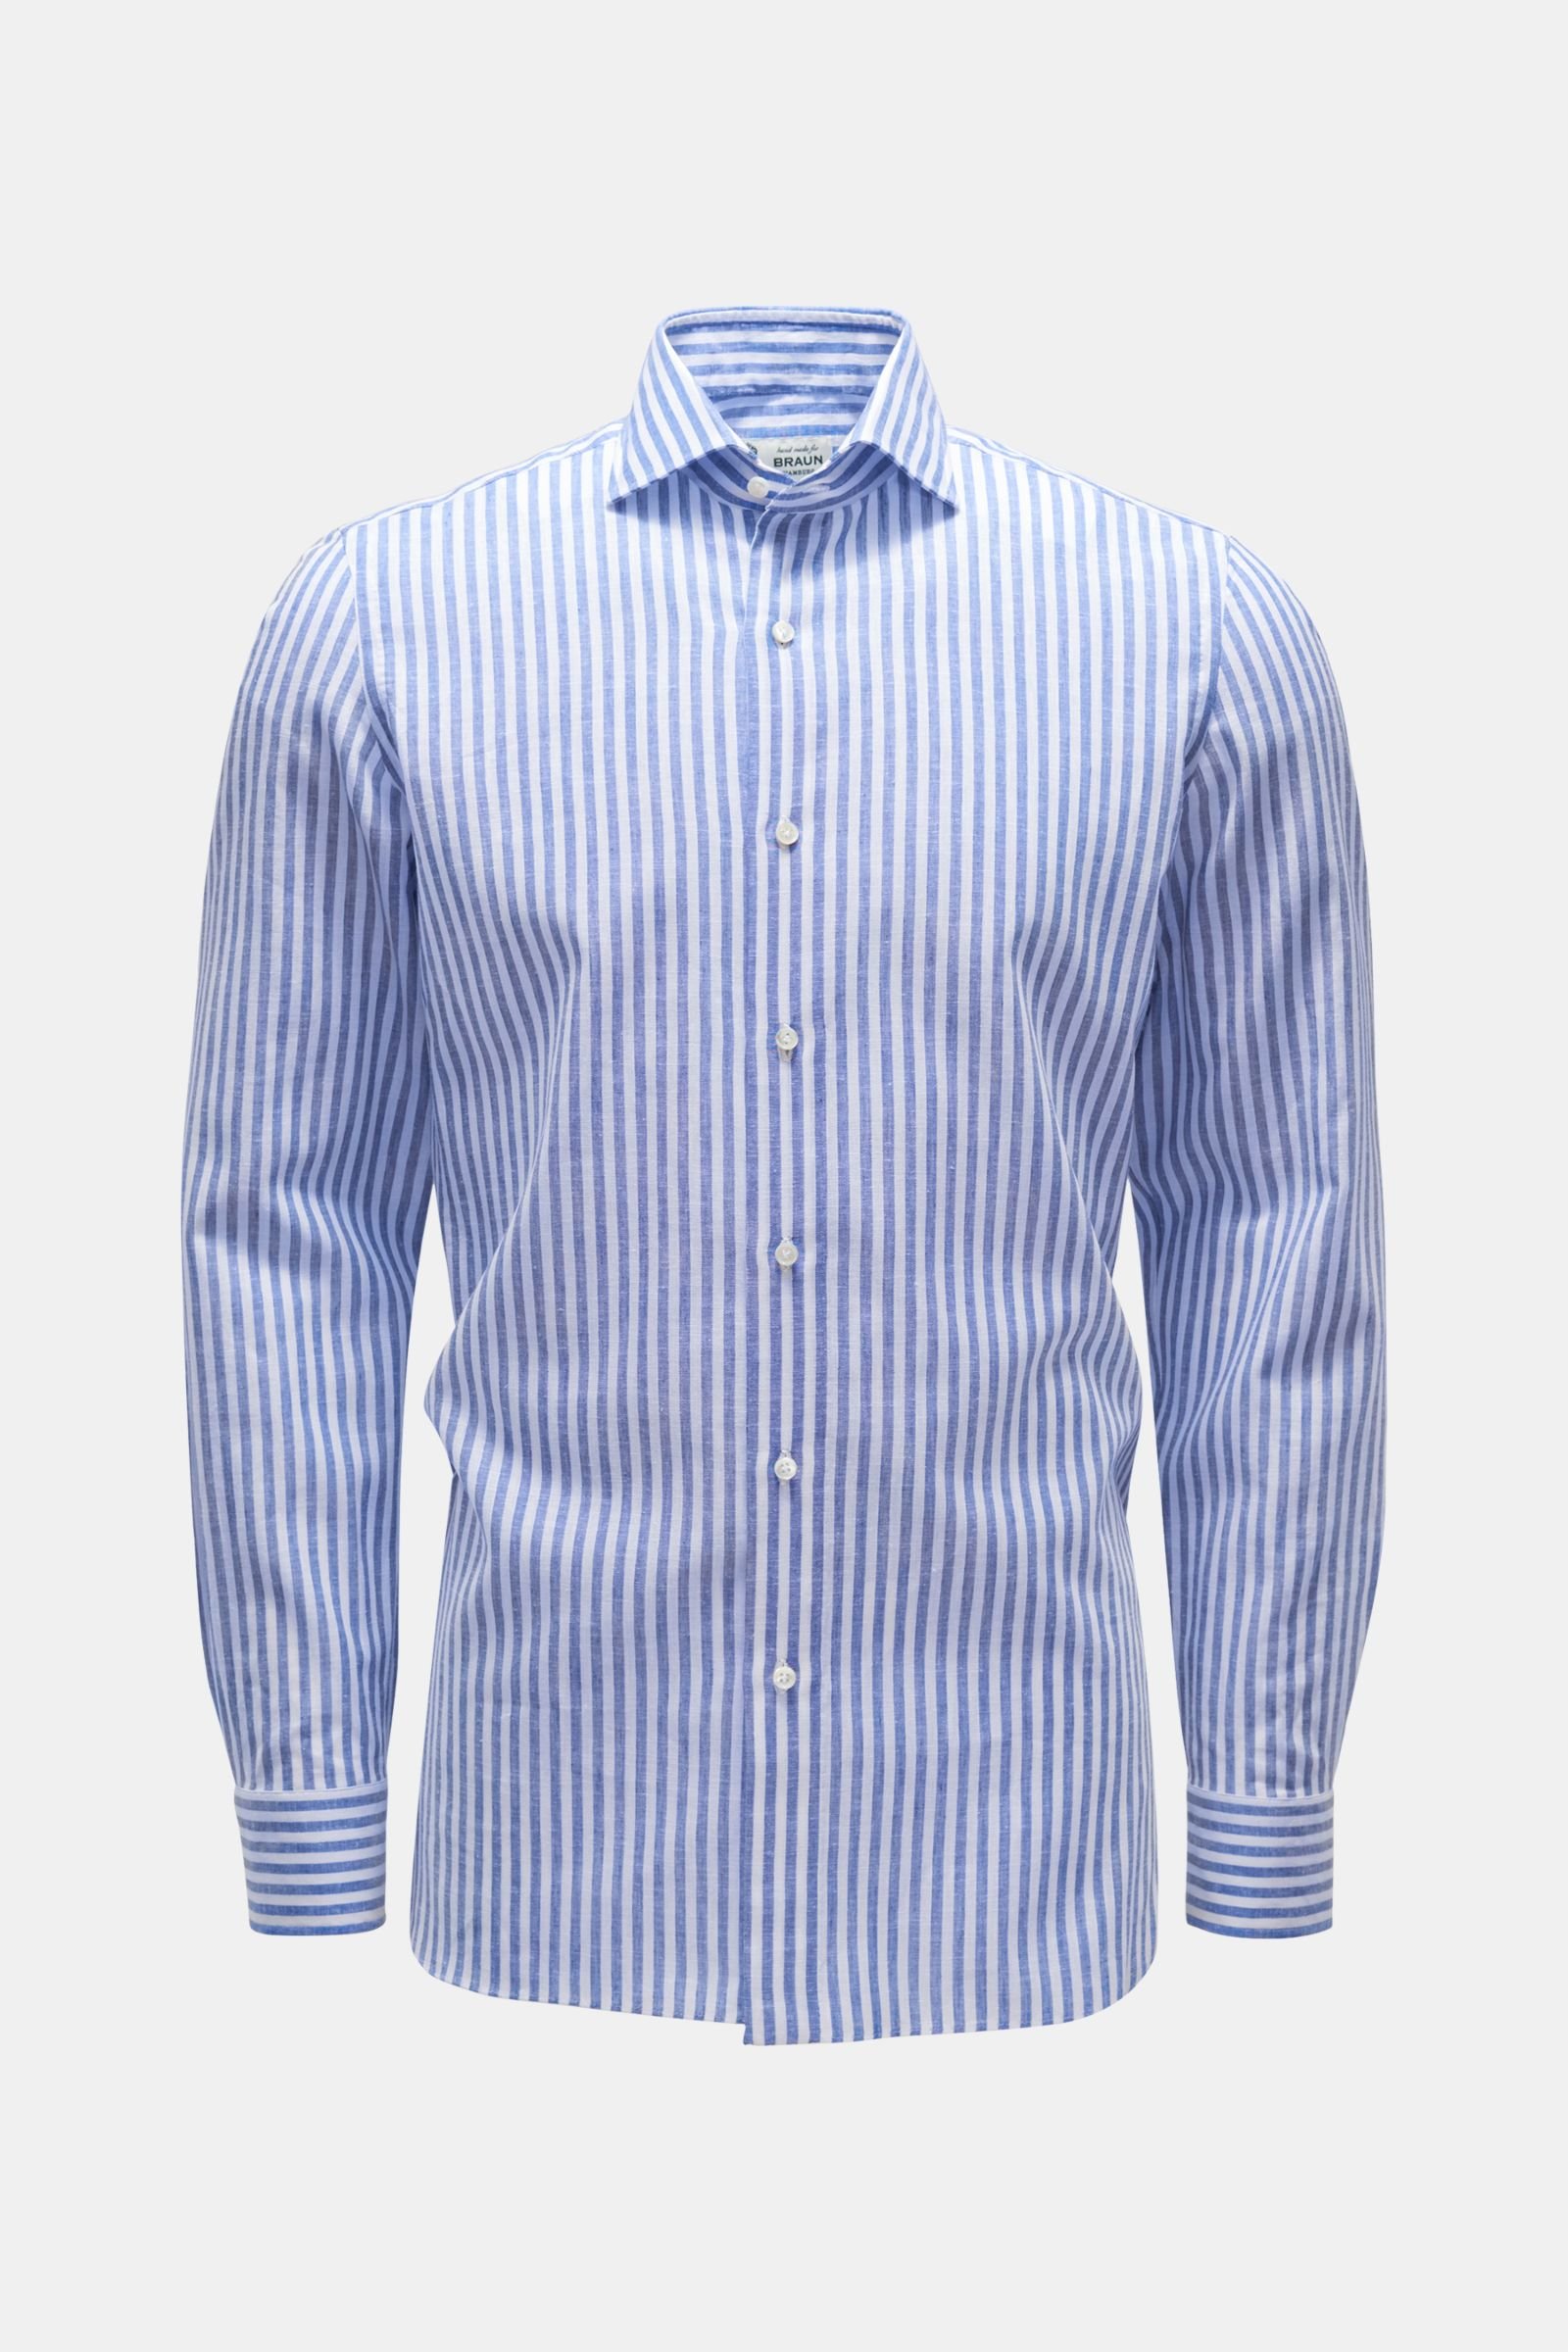 Linen shirt 'Nando' shark collar blue/white striped